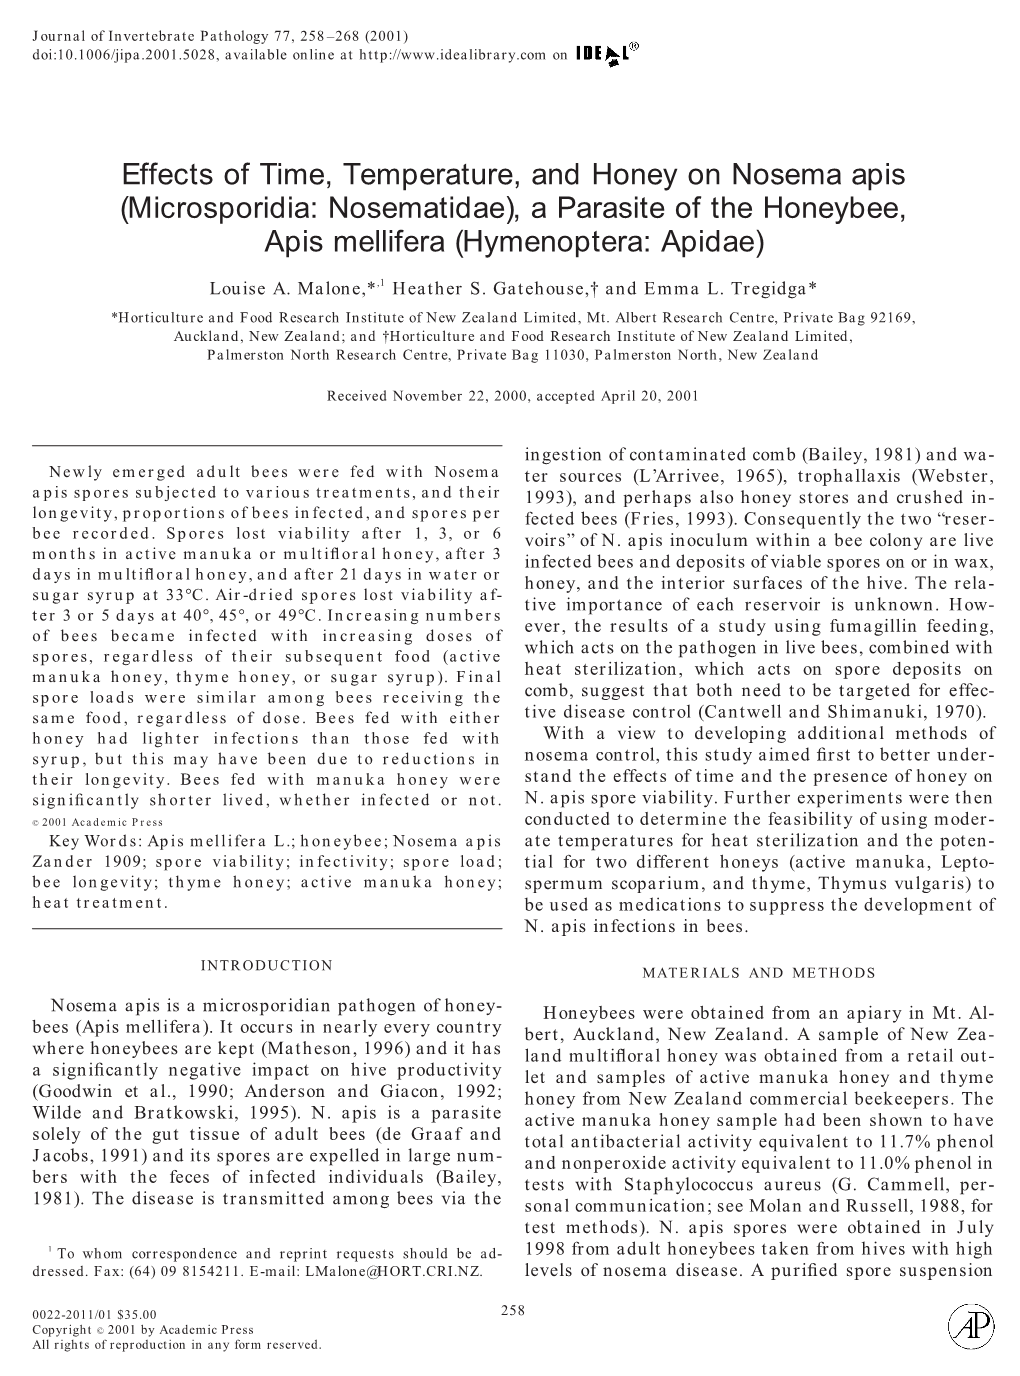 Effects of Time, Temperature, and Honey on Nosema Apis (Microsporidia: Nosematidae), a Parasite of the Honeybee, Apis Mellifera (Hymenoptera: Apidae)